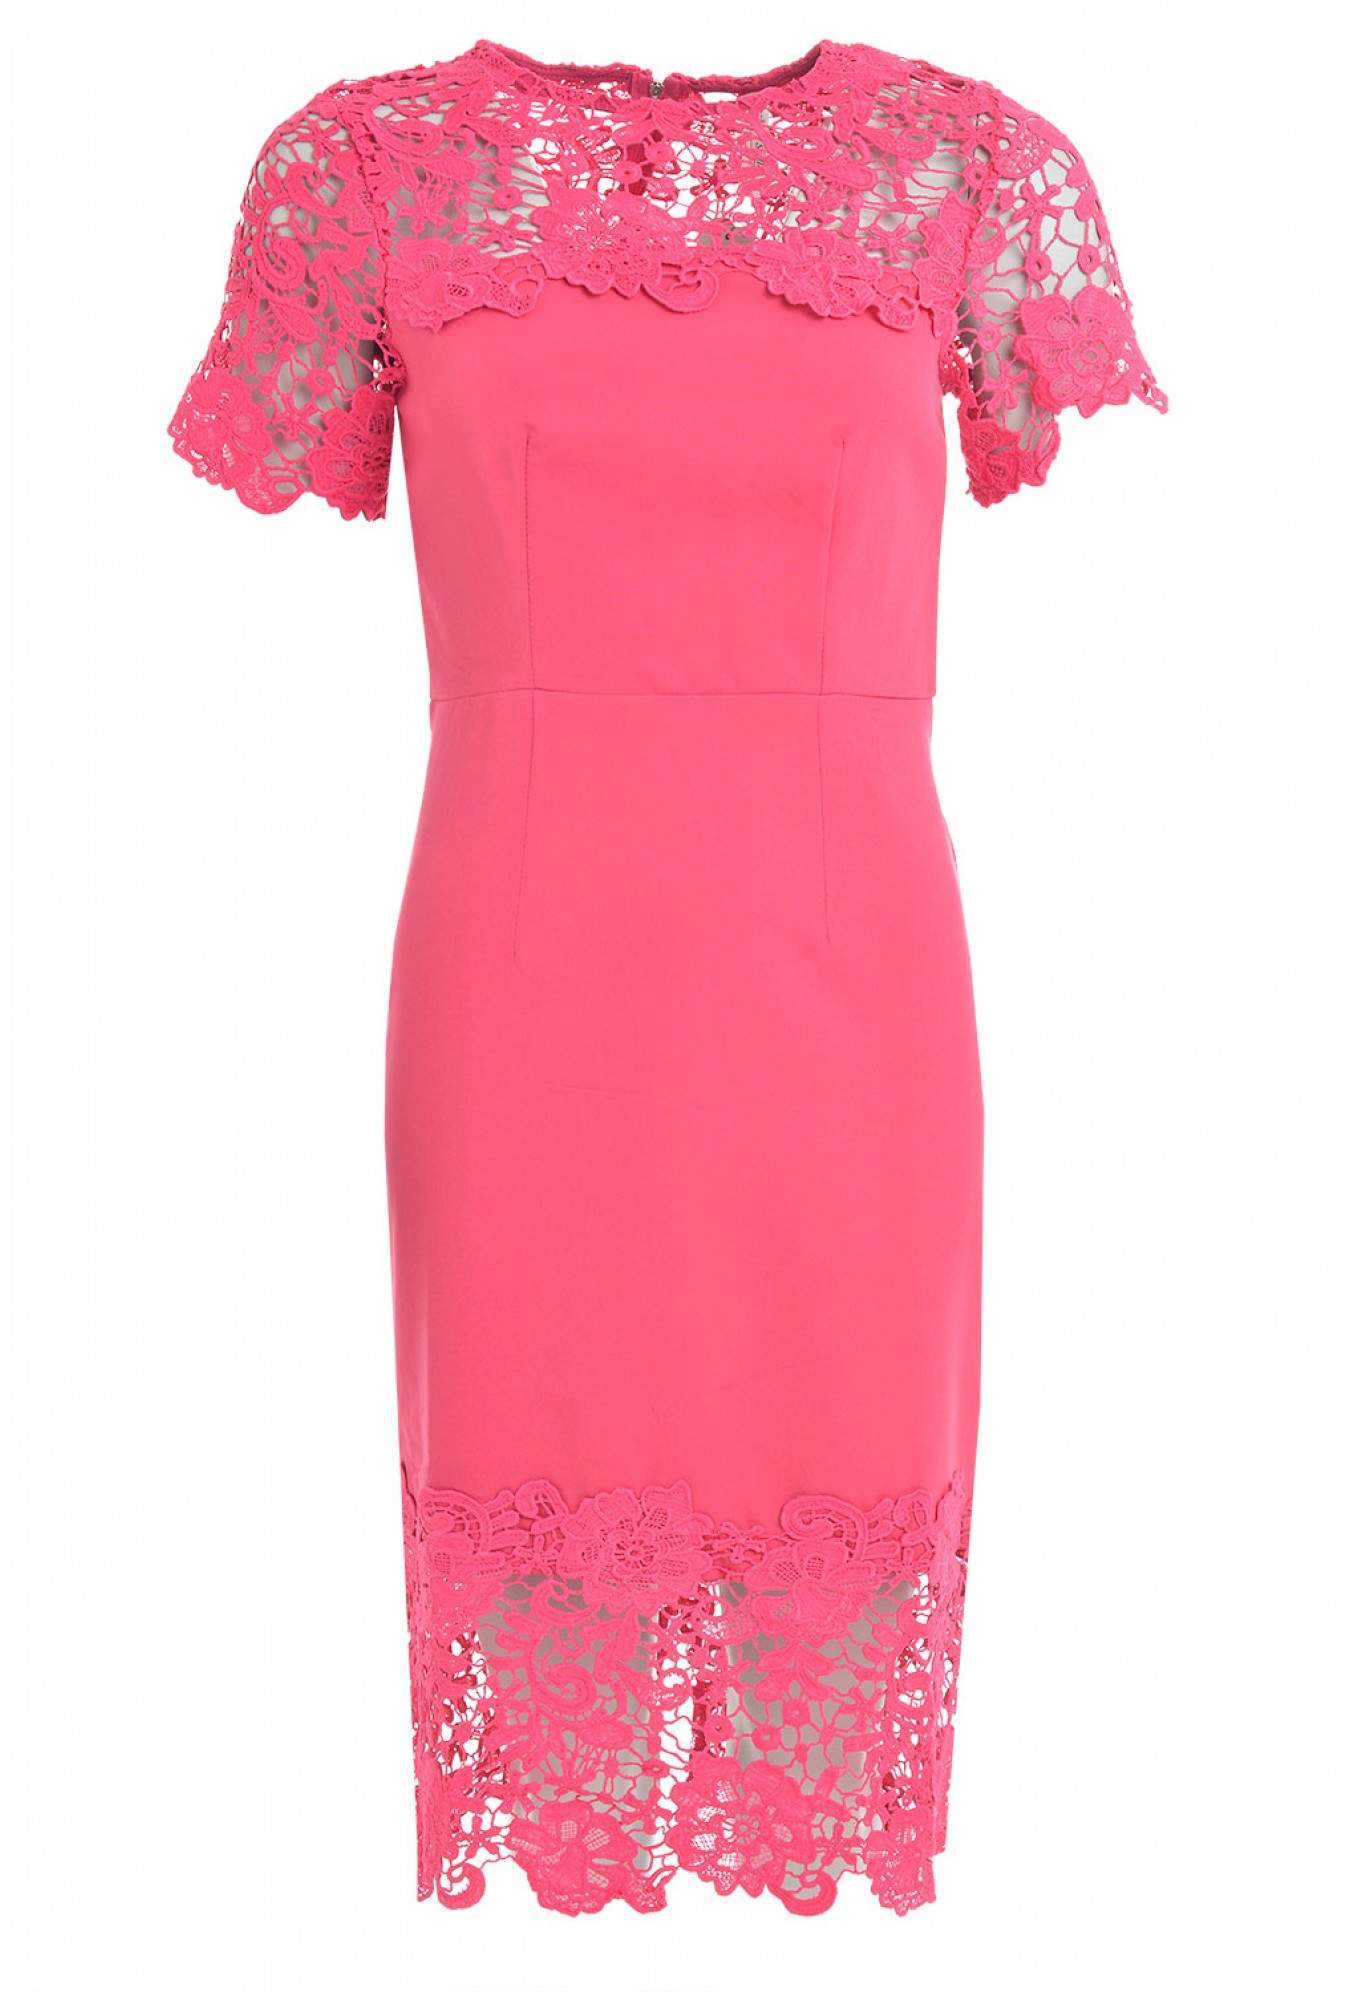 Stella Bailey Crochet Trim Dress in Pink | iCLOTHING